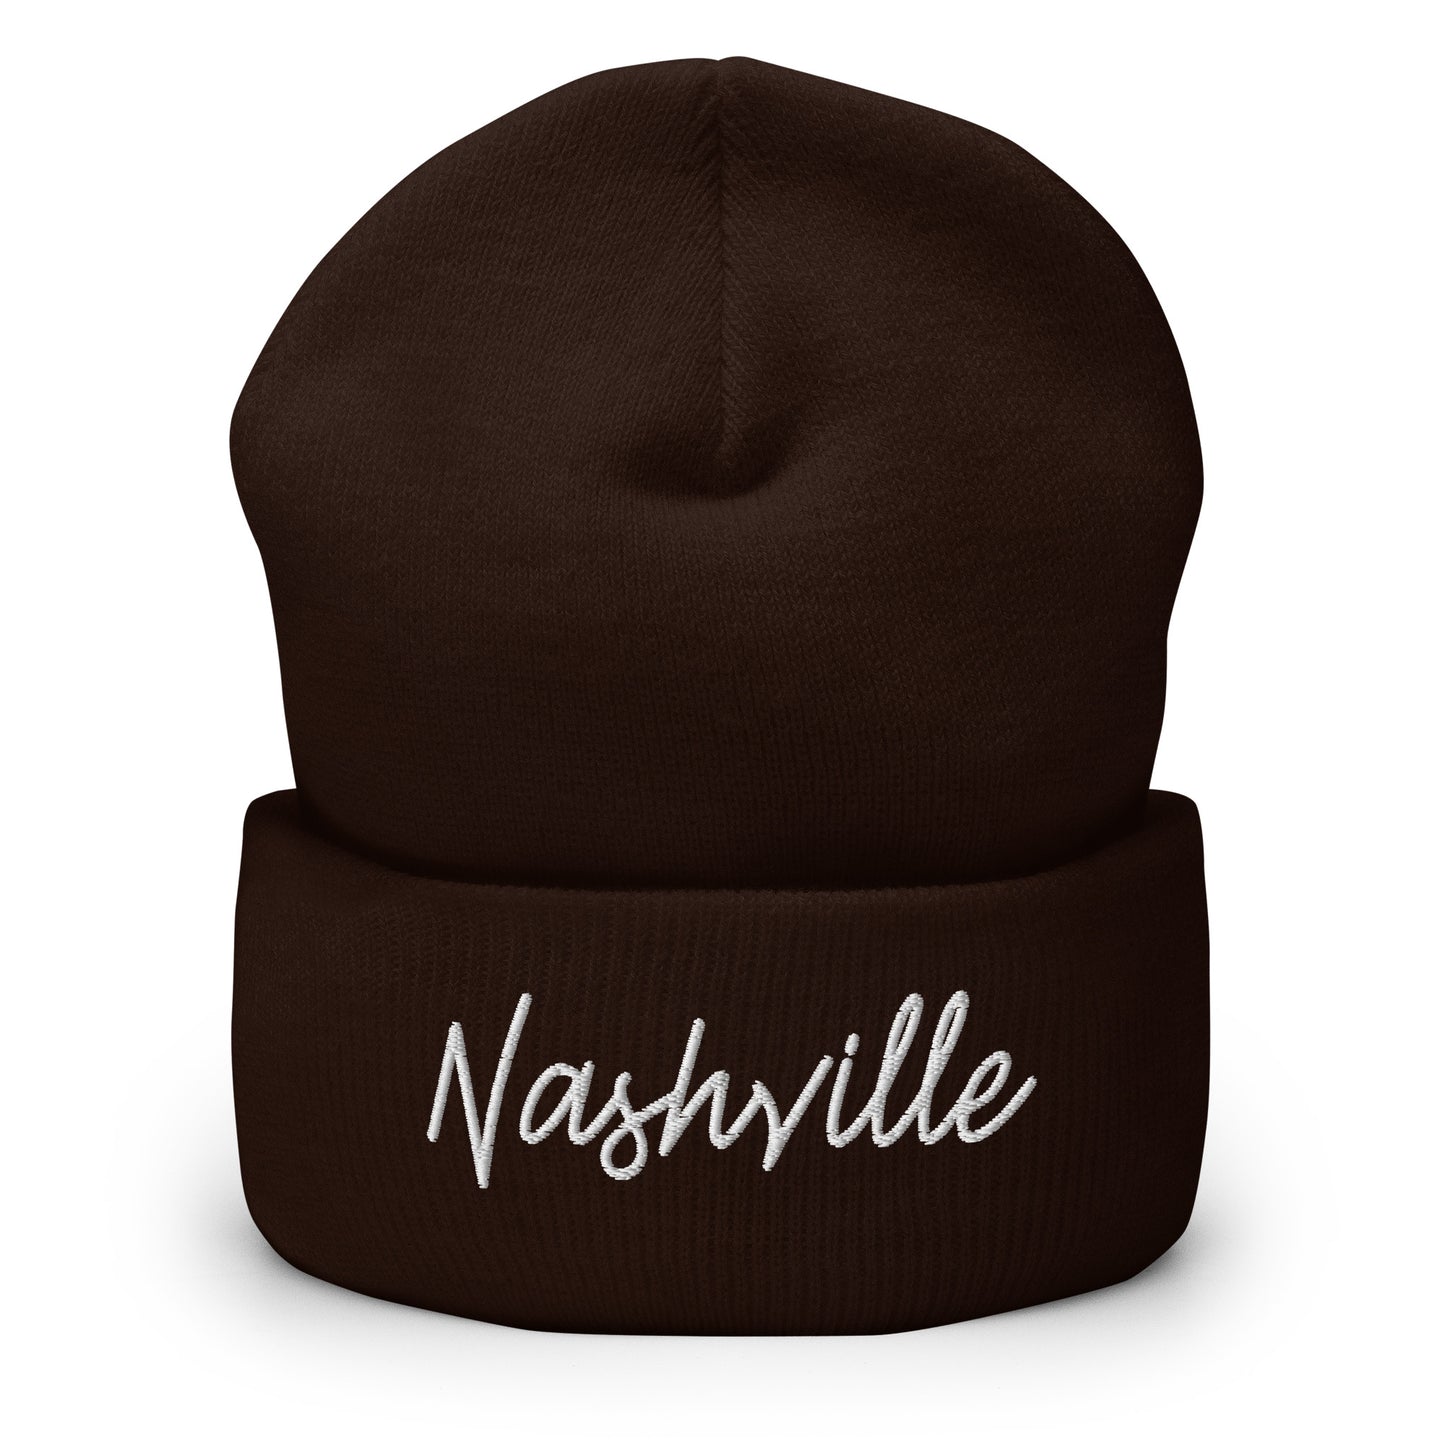 Nashville Retro Script Cuffed Beanie Hat